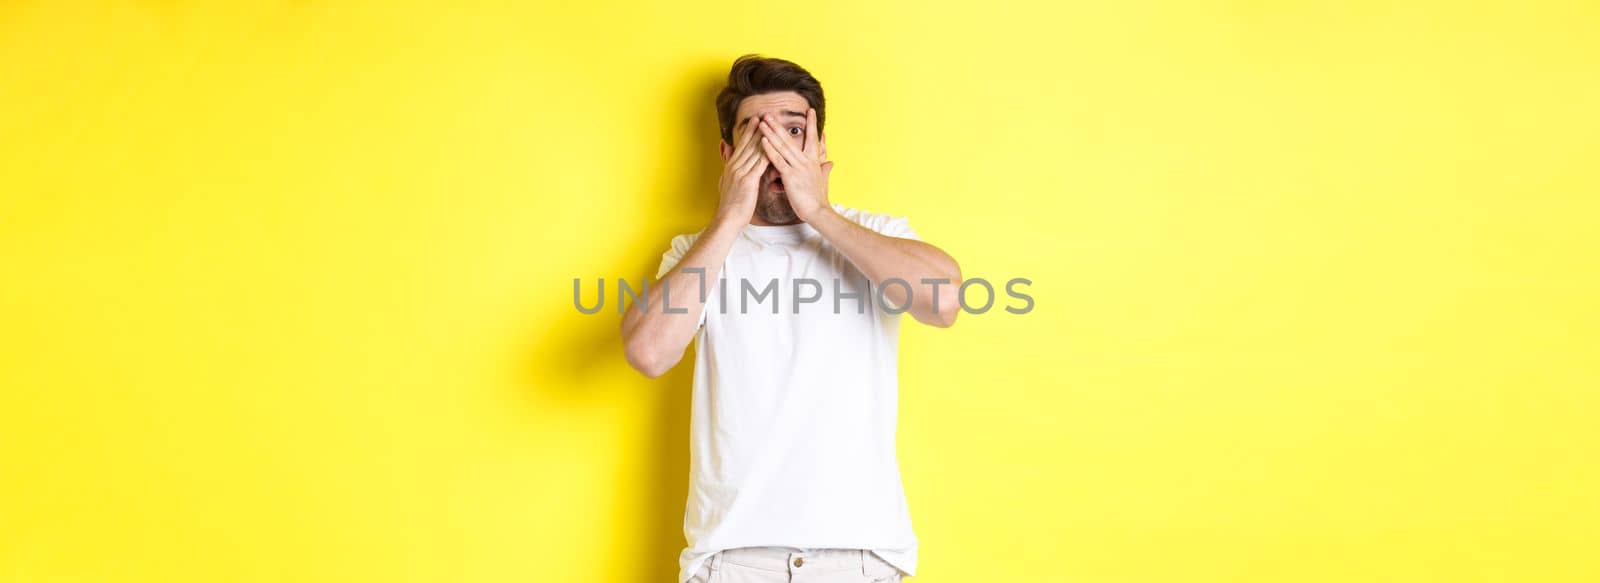 Embarrassed guy shut eyes but peeking through fingers at something awkward, standing over yellow background.